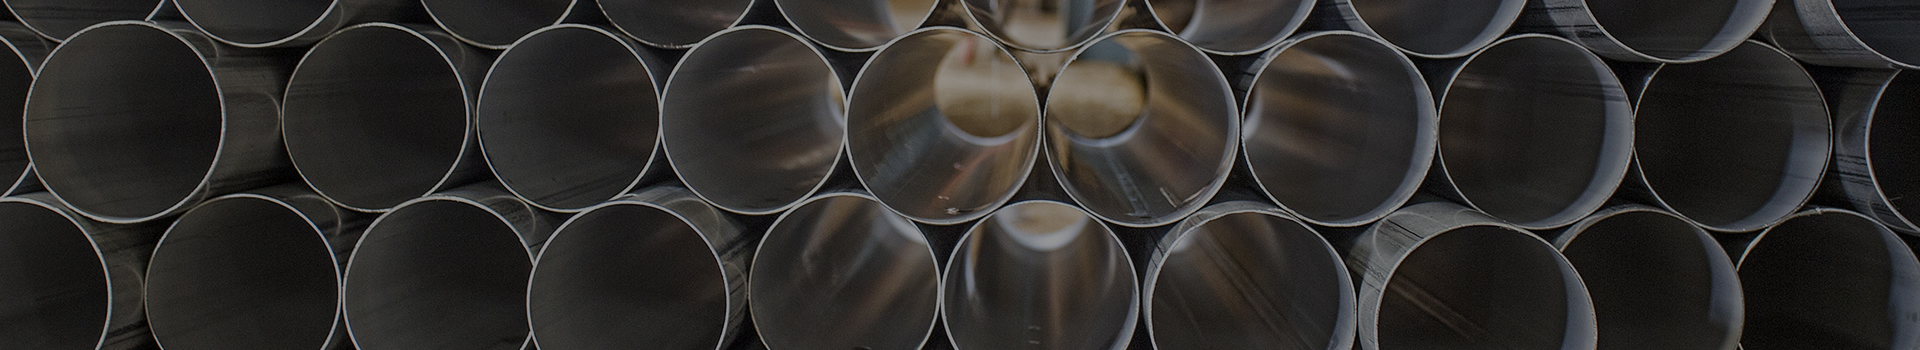 Stainless Steel Seamless Tubes, Pipes & U-tubes - Divine Tubes Pvt. Ltd.